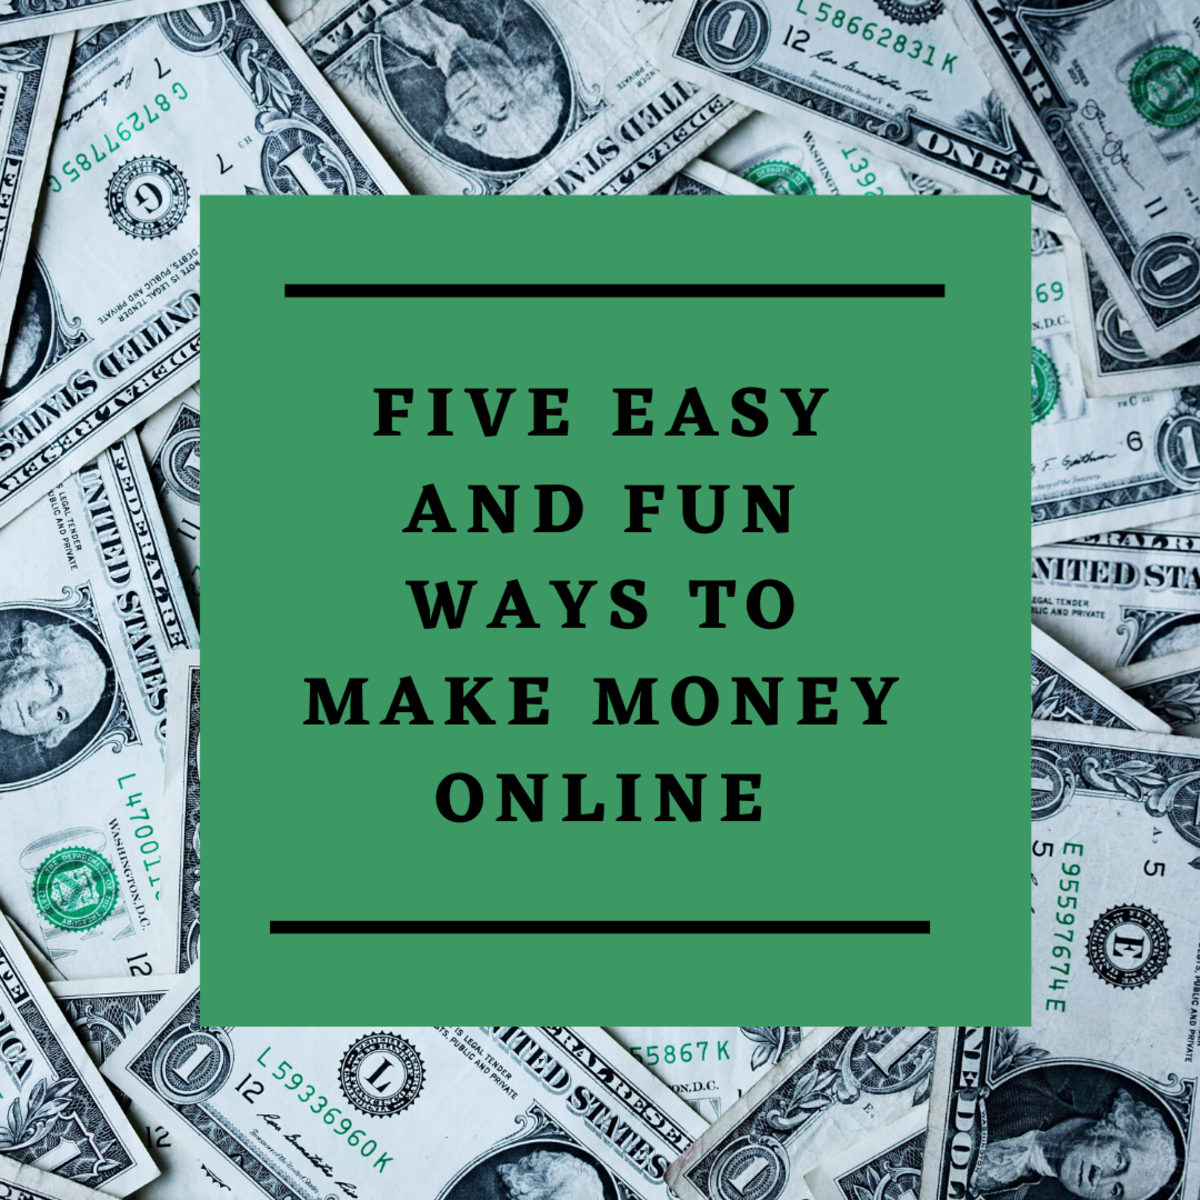 Easy Make Money Online Money Make Ways Easy Fun Five Learn Extra Read ...